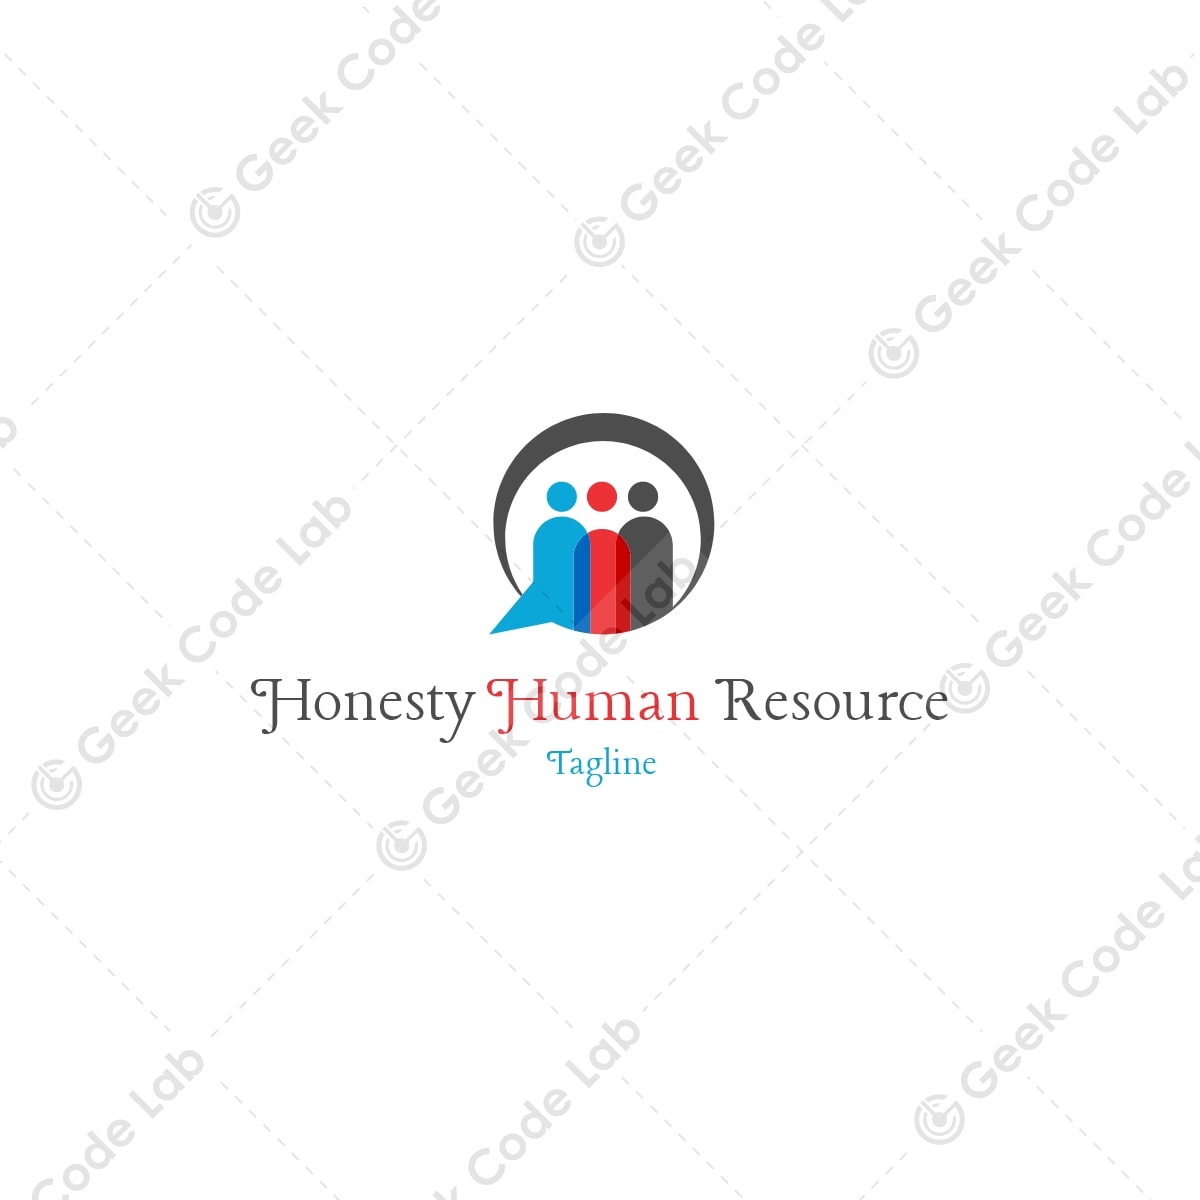 Honesty Human Resource